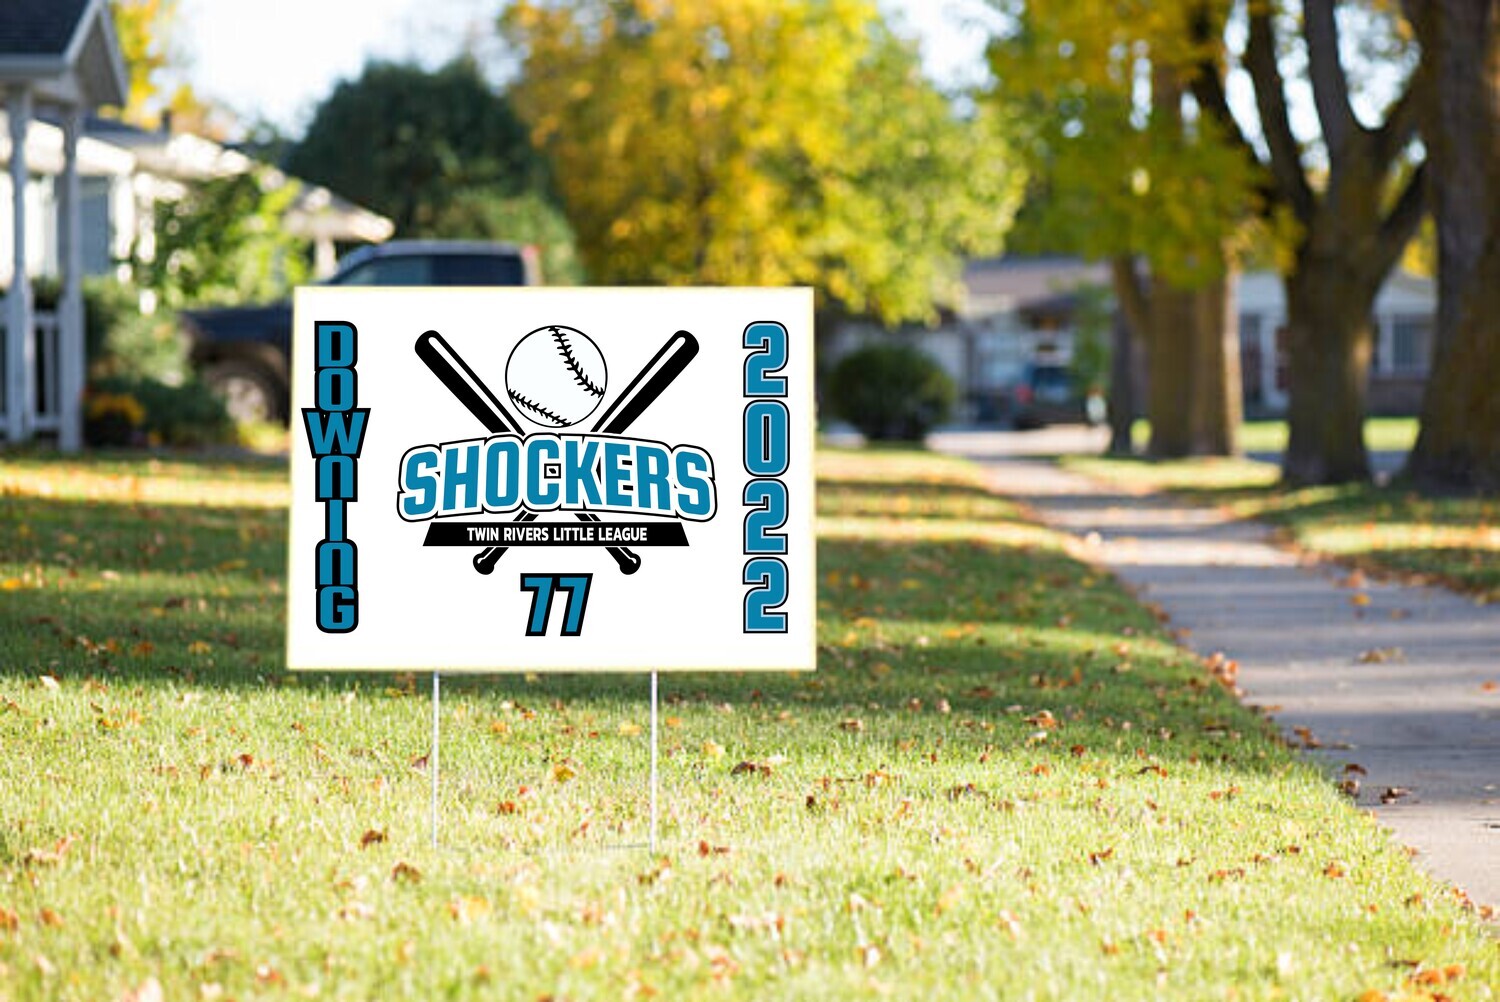 Shockers Yard Sign